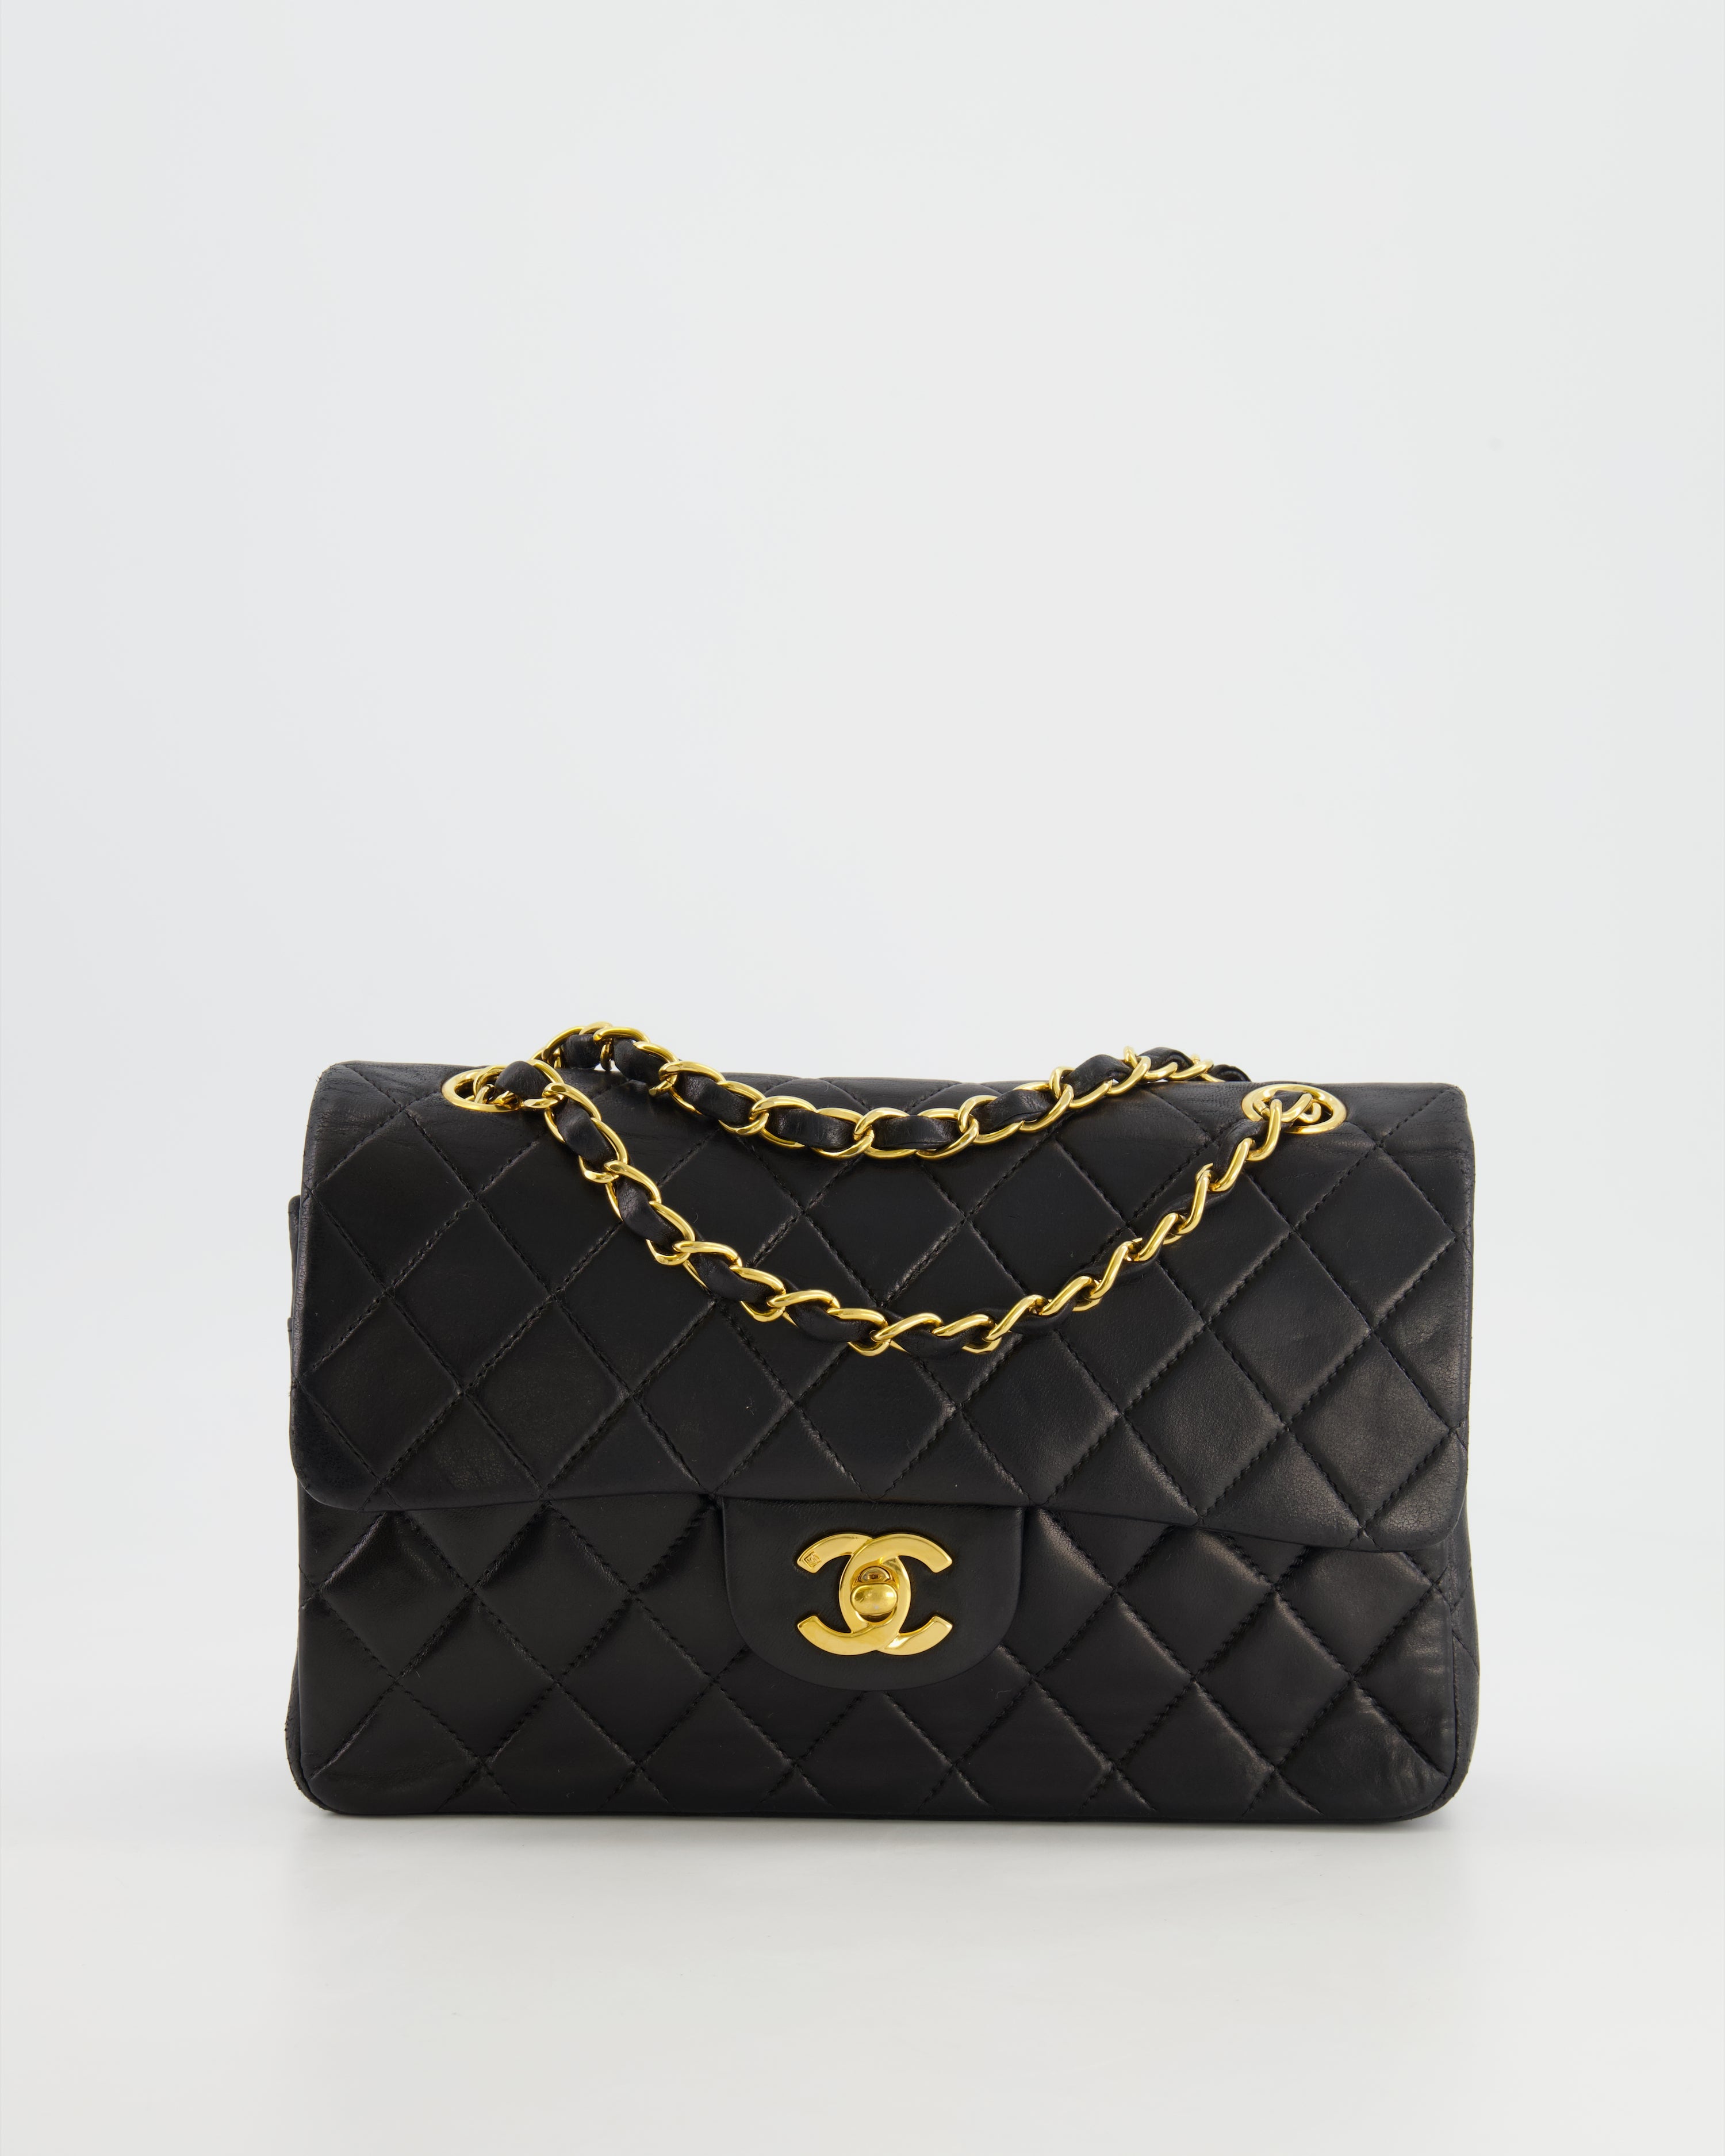 Chanel Small Double Flap Black Lambskin Handbag in Box